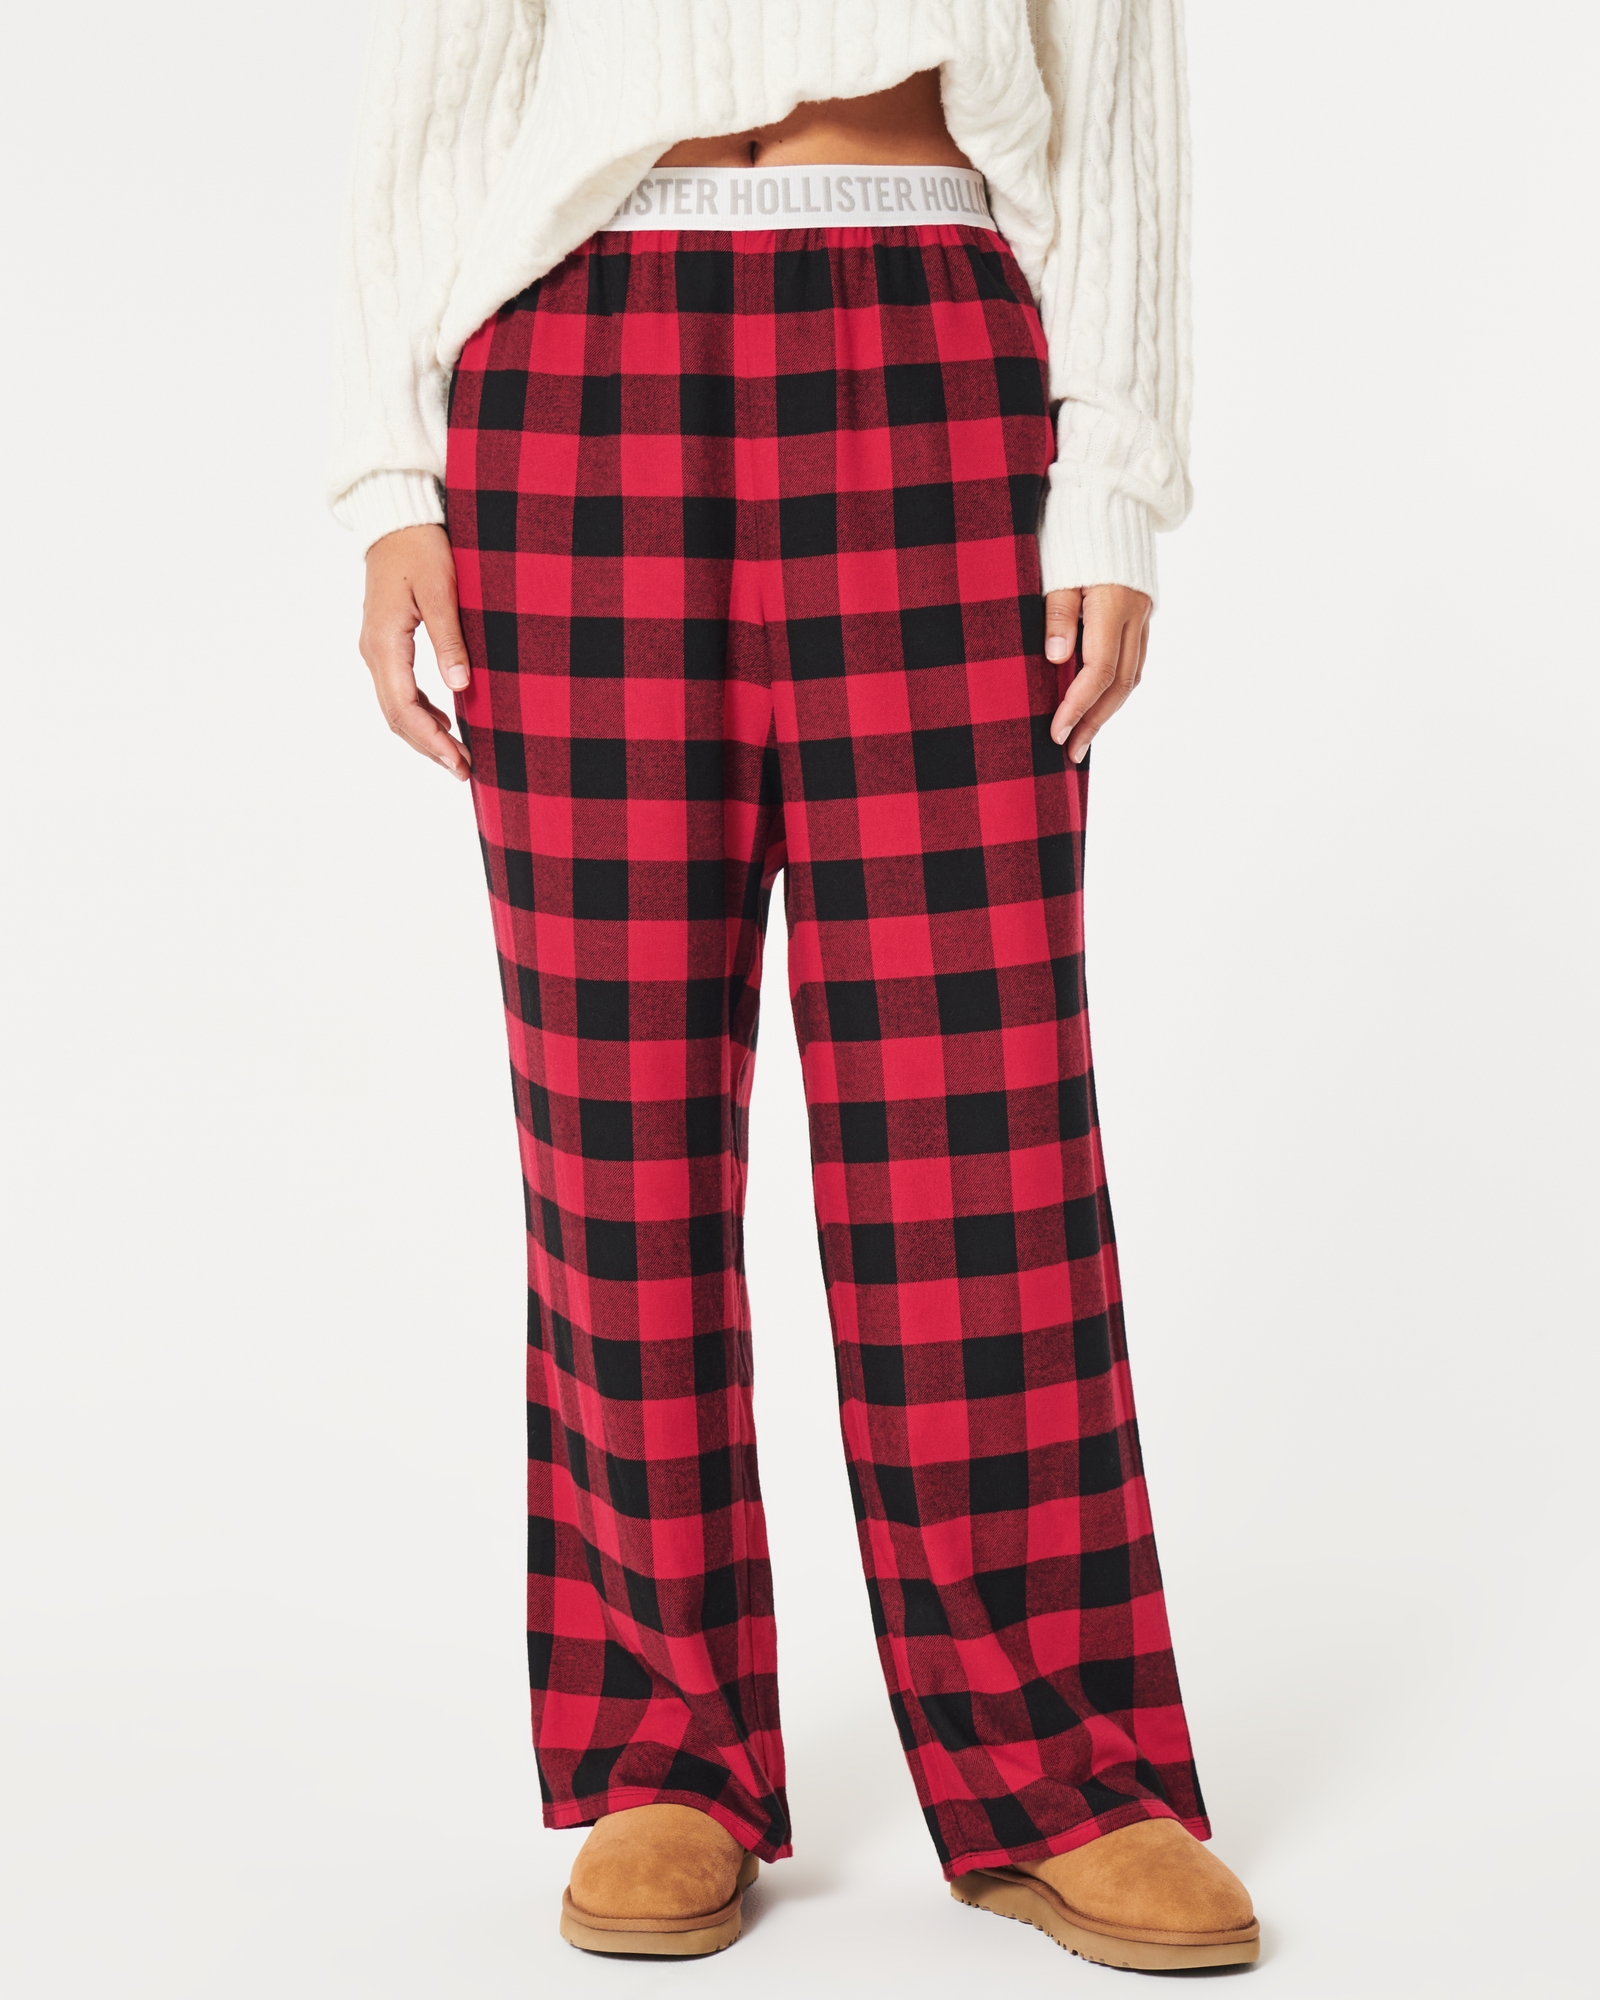 Hollister plaid pyjama shorts